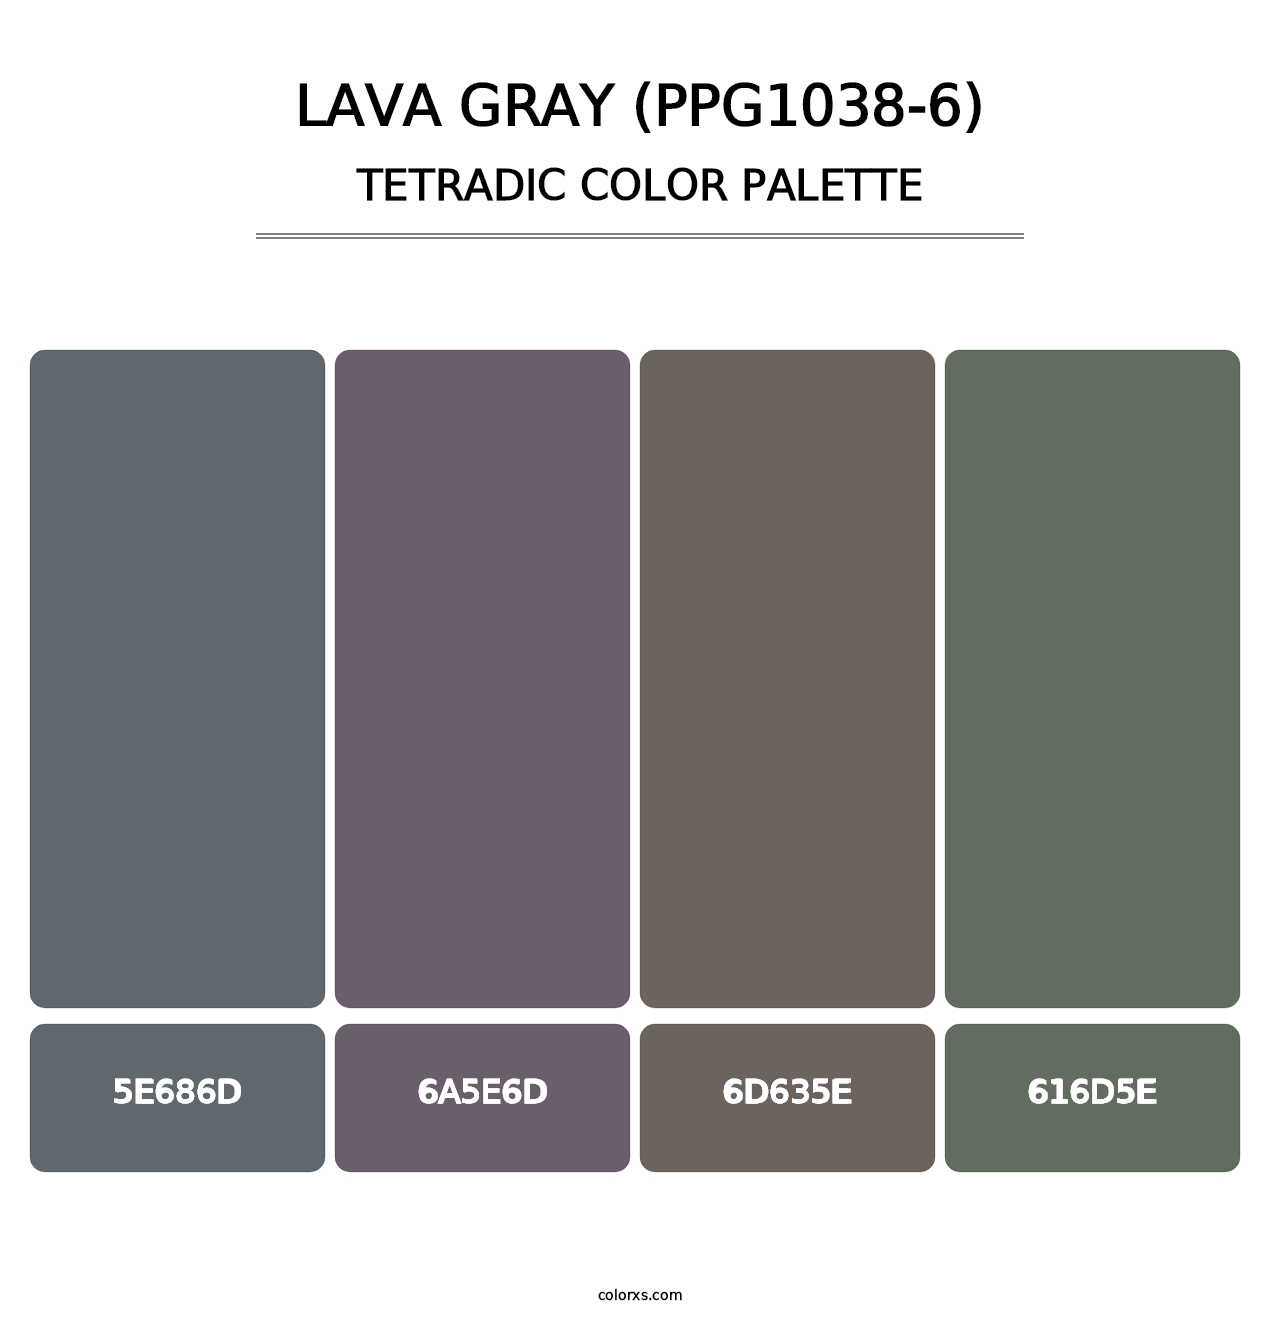 Lava Gray (PPG1038-6) - Tetradic Color Palette